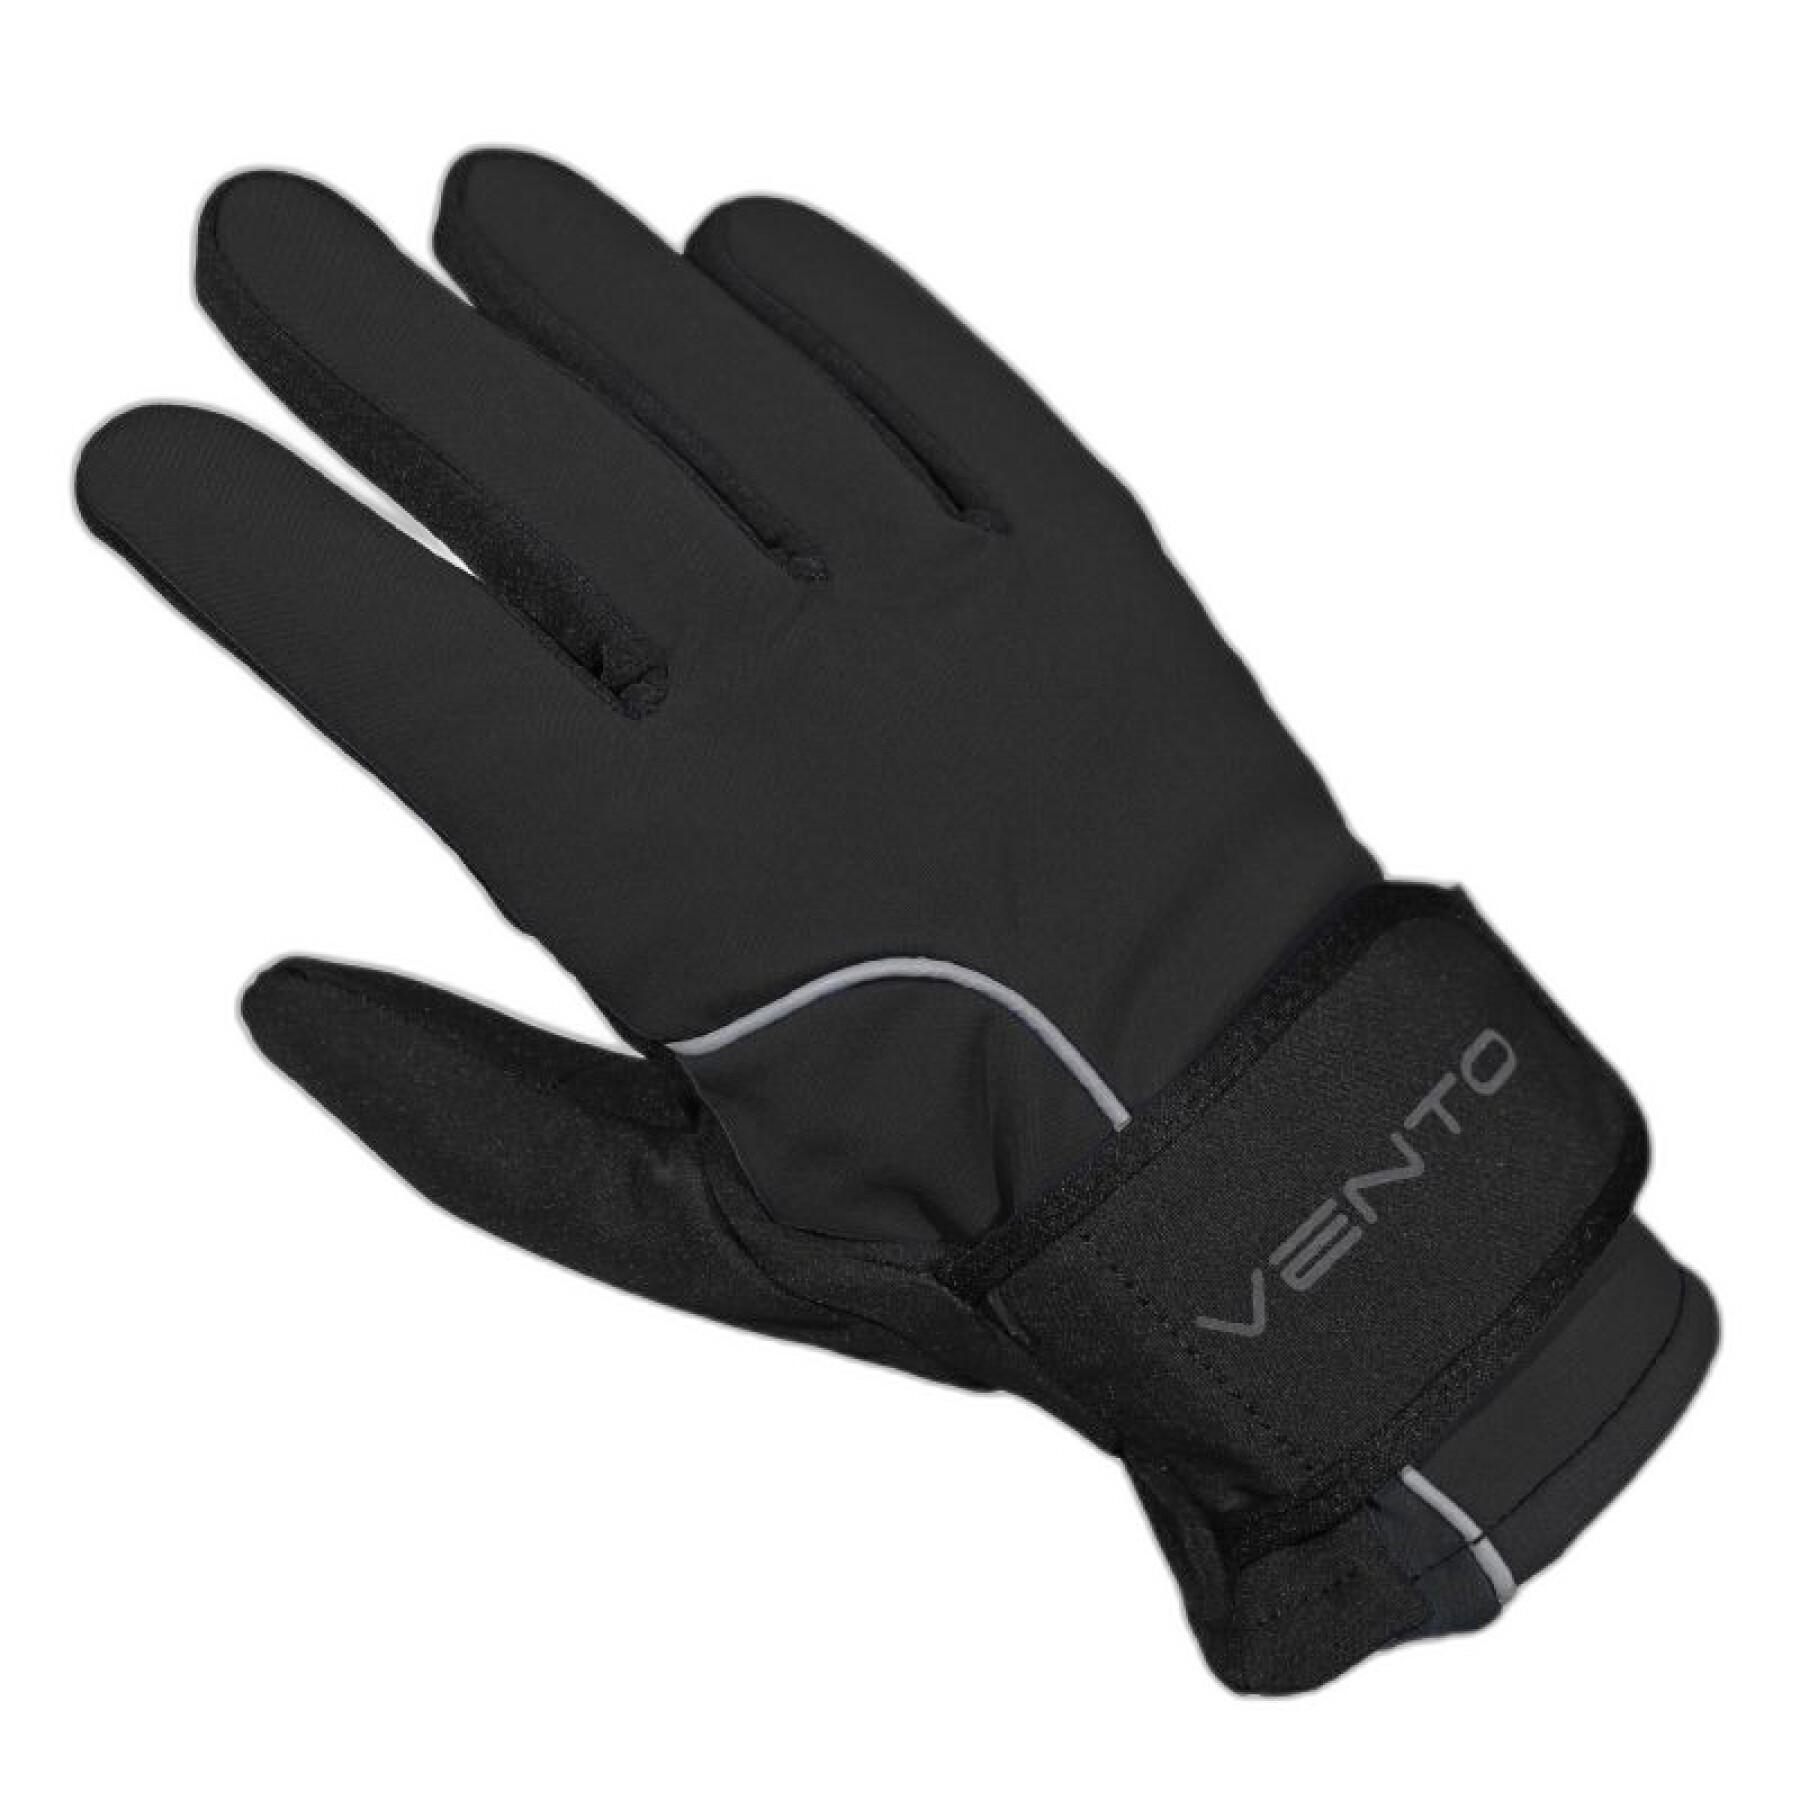 Long winter cycling gloves P2R Vento